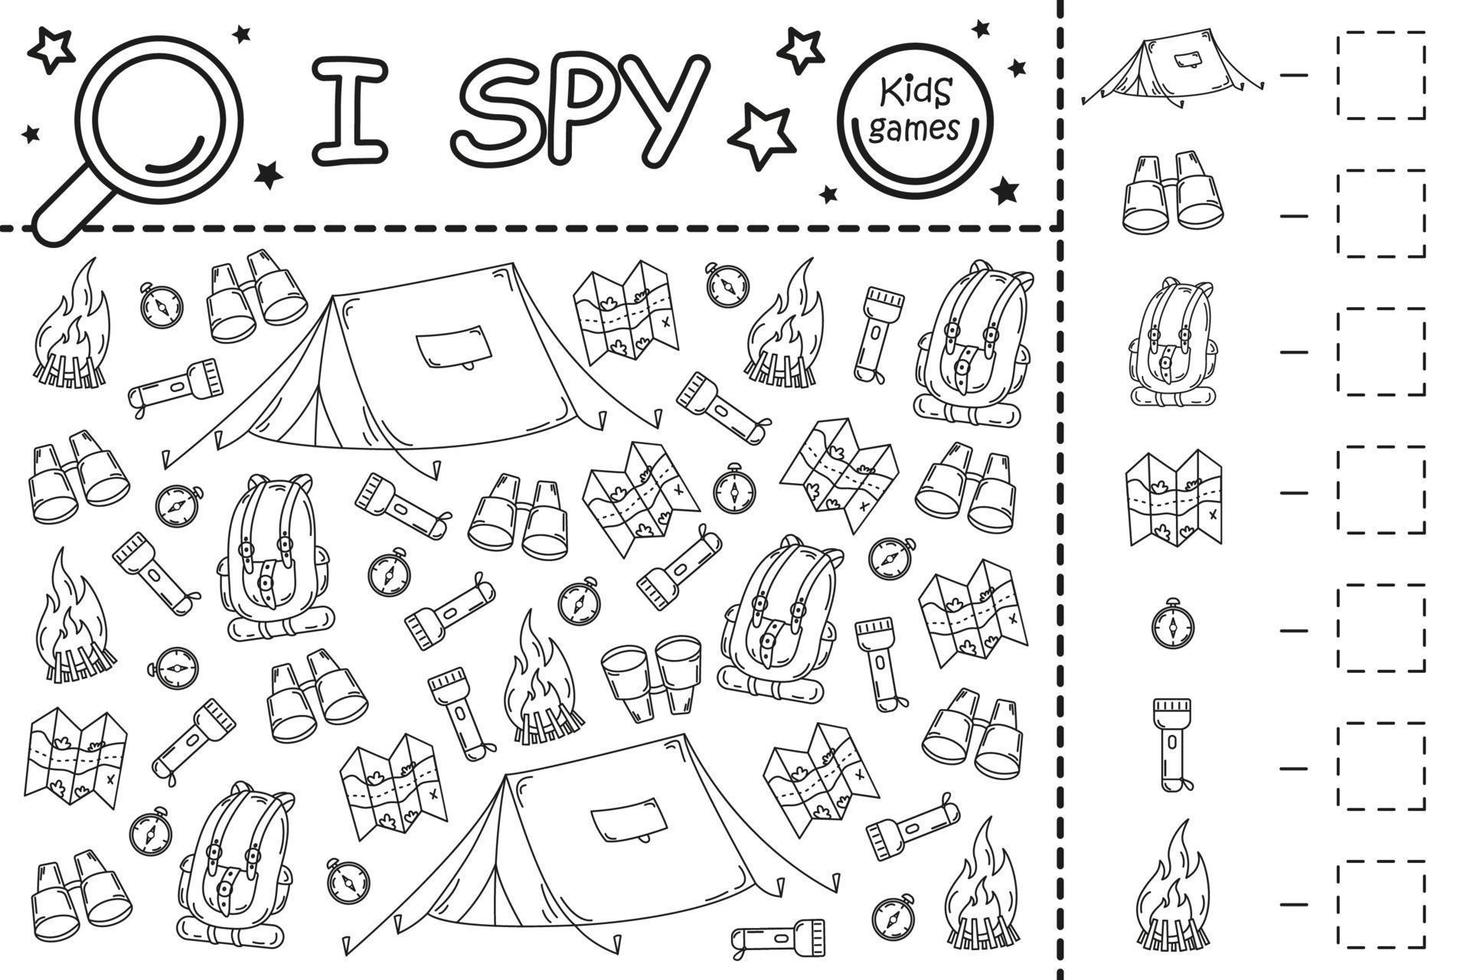 Spy game background vector